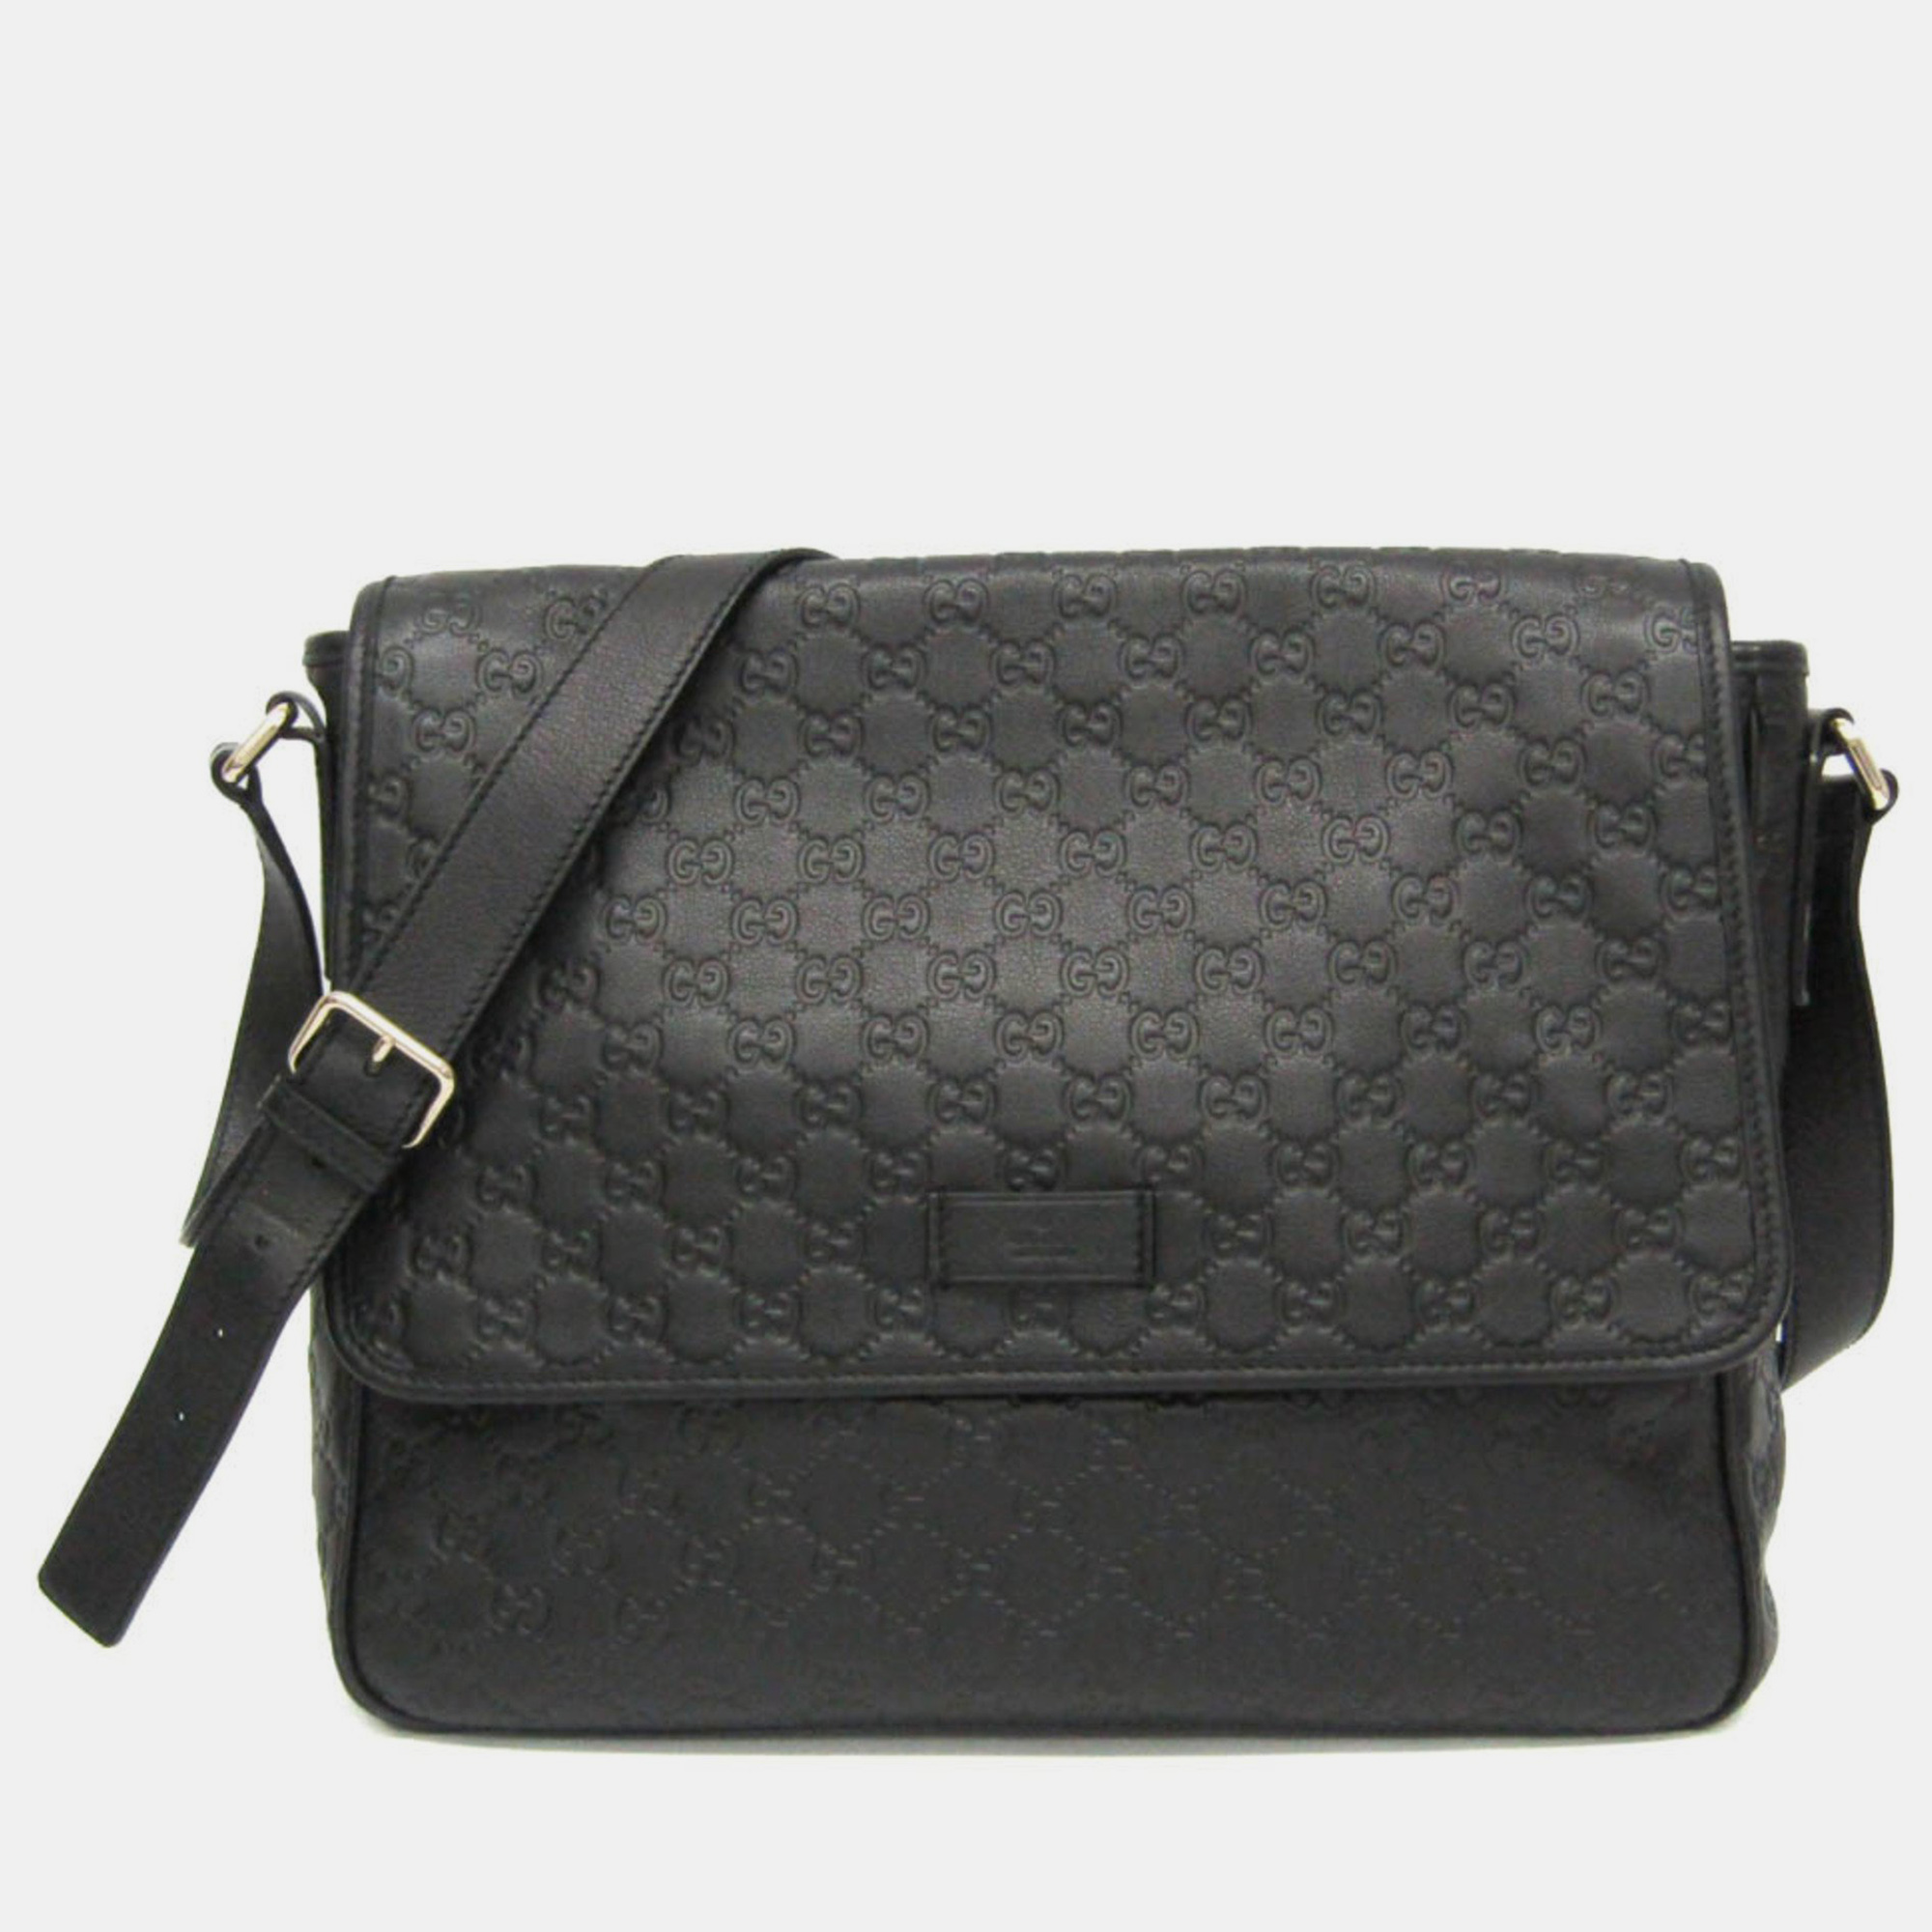 

Gucci Black Leather GG Signature Medium Messenger Bag